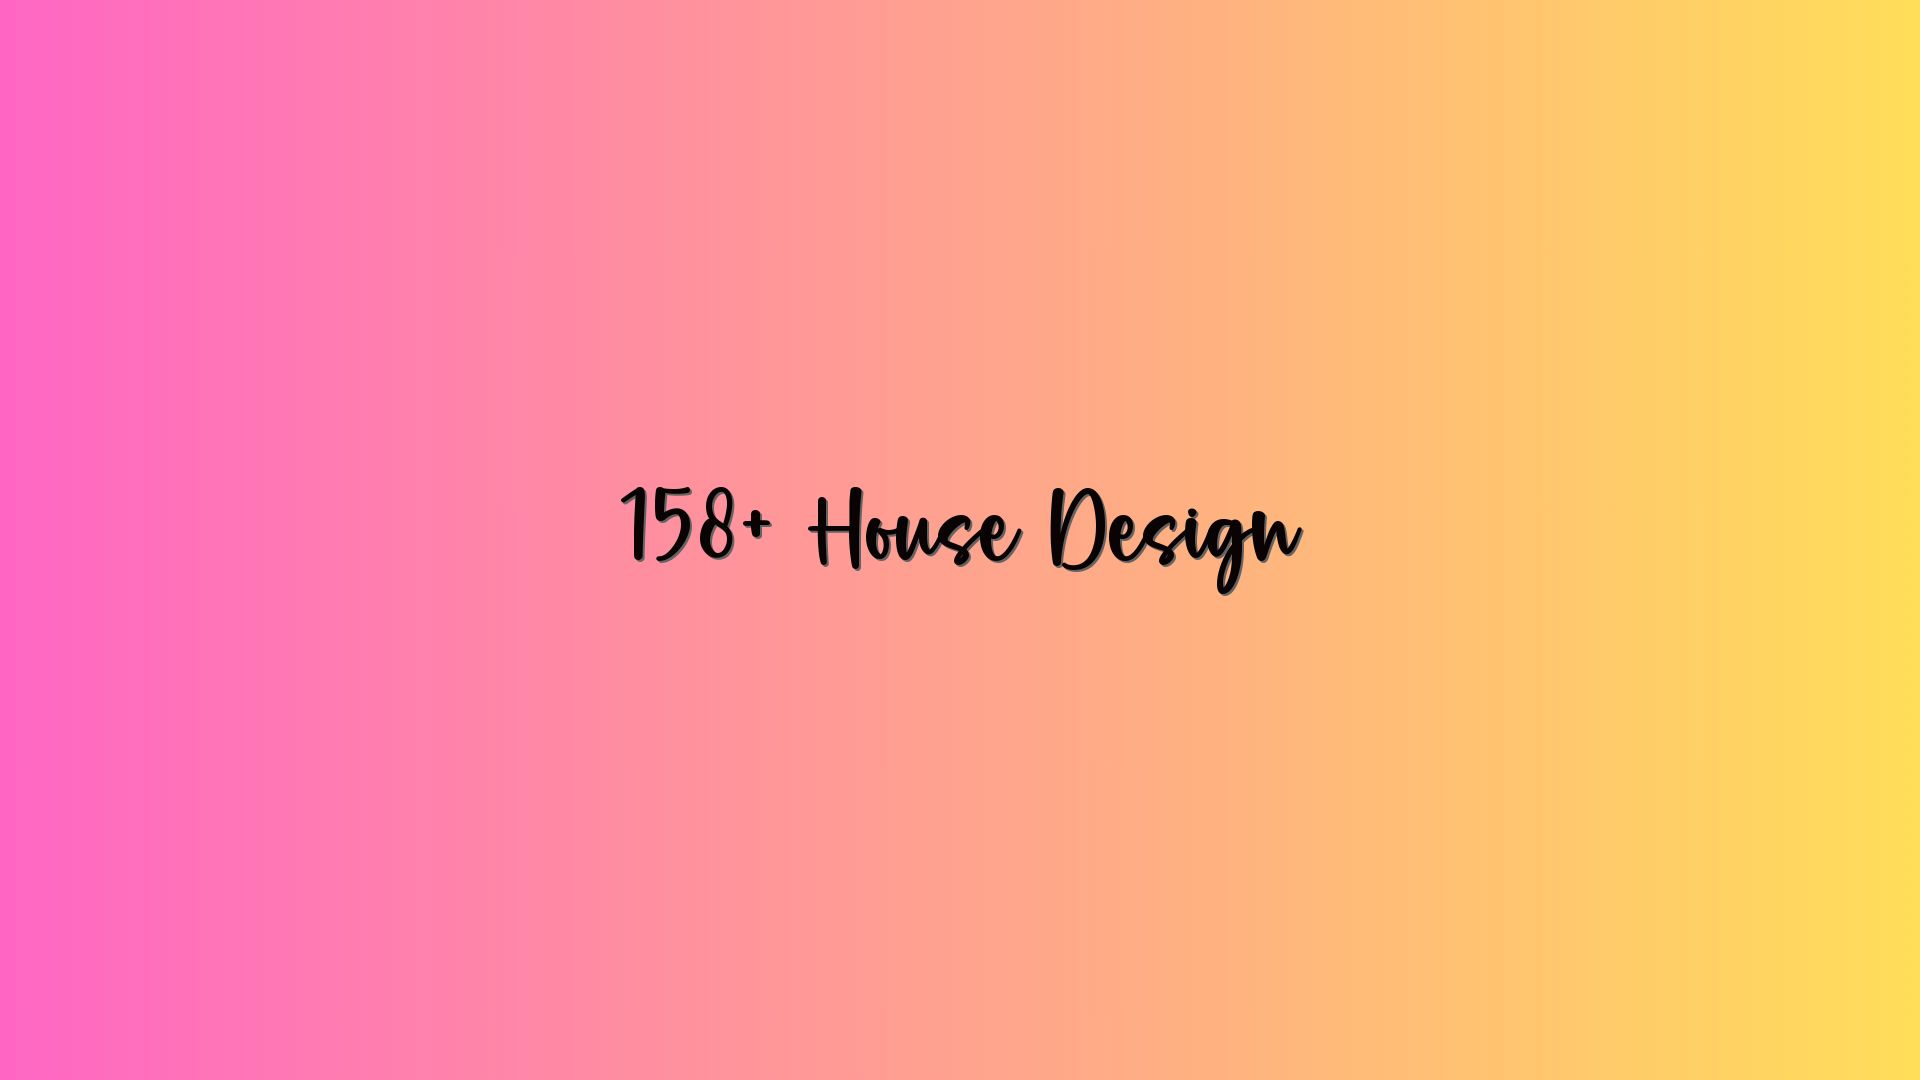 158+ House Design